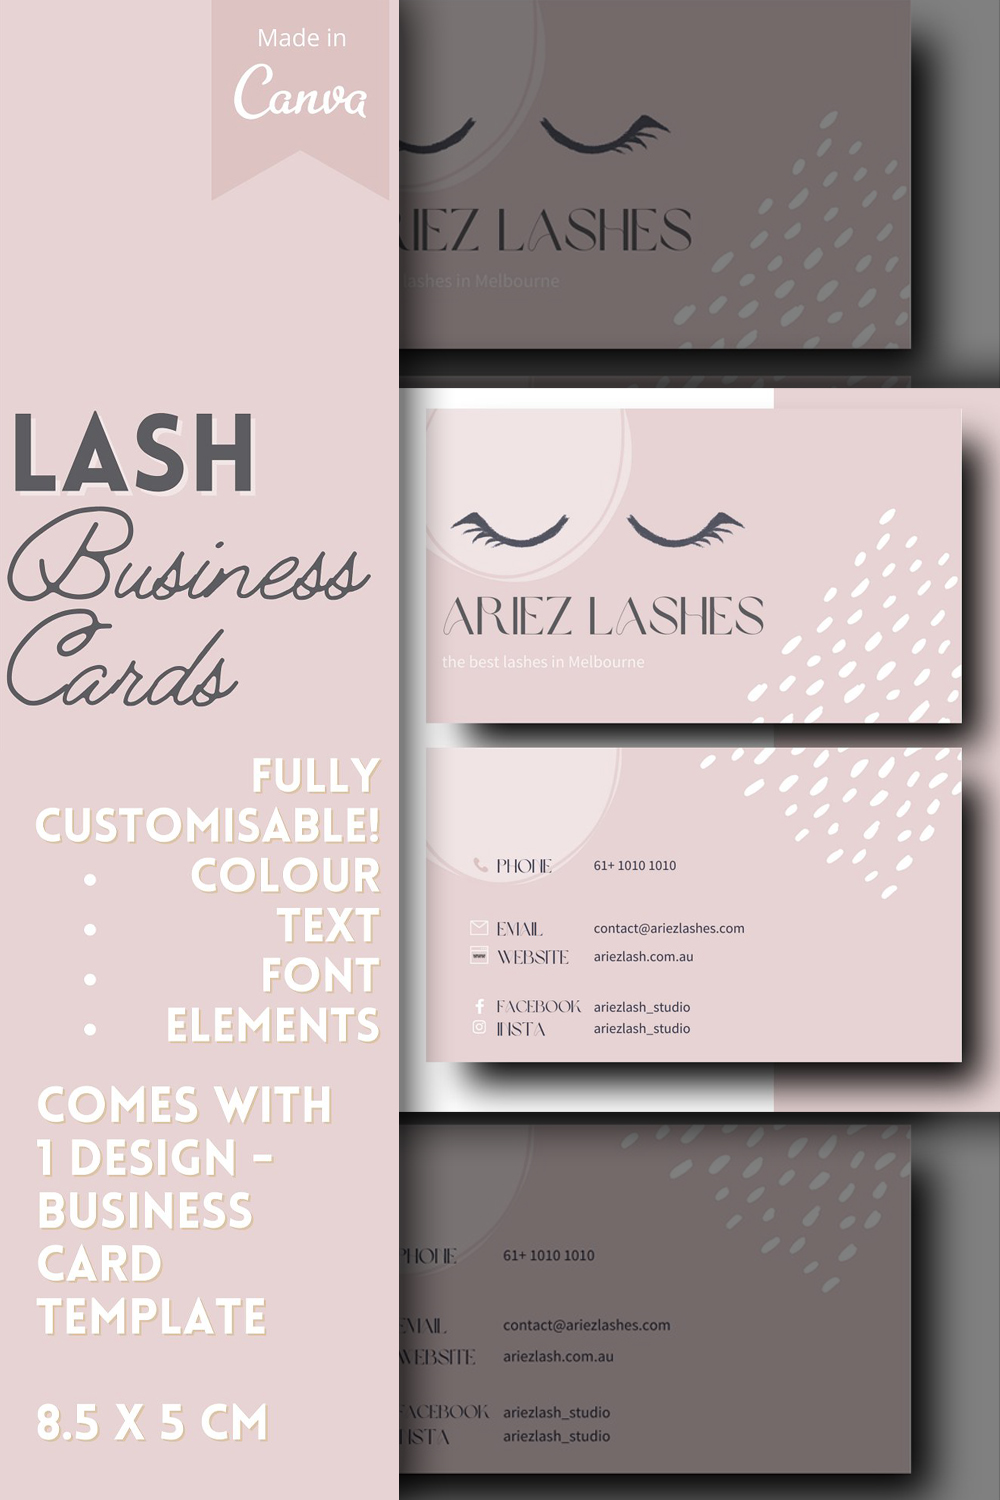 Digital lash business card templates of pinterest.